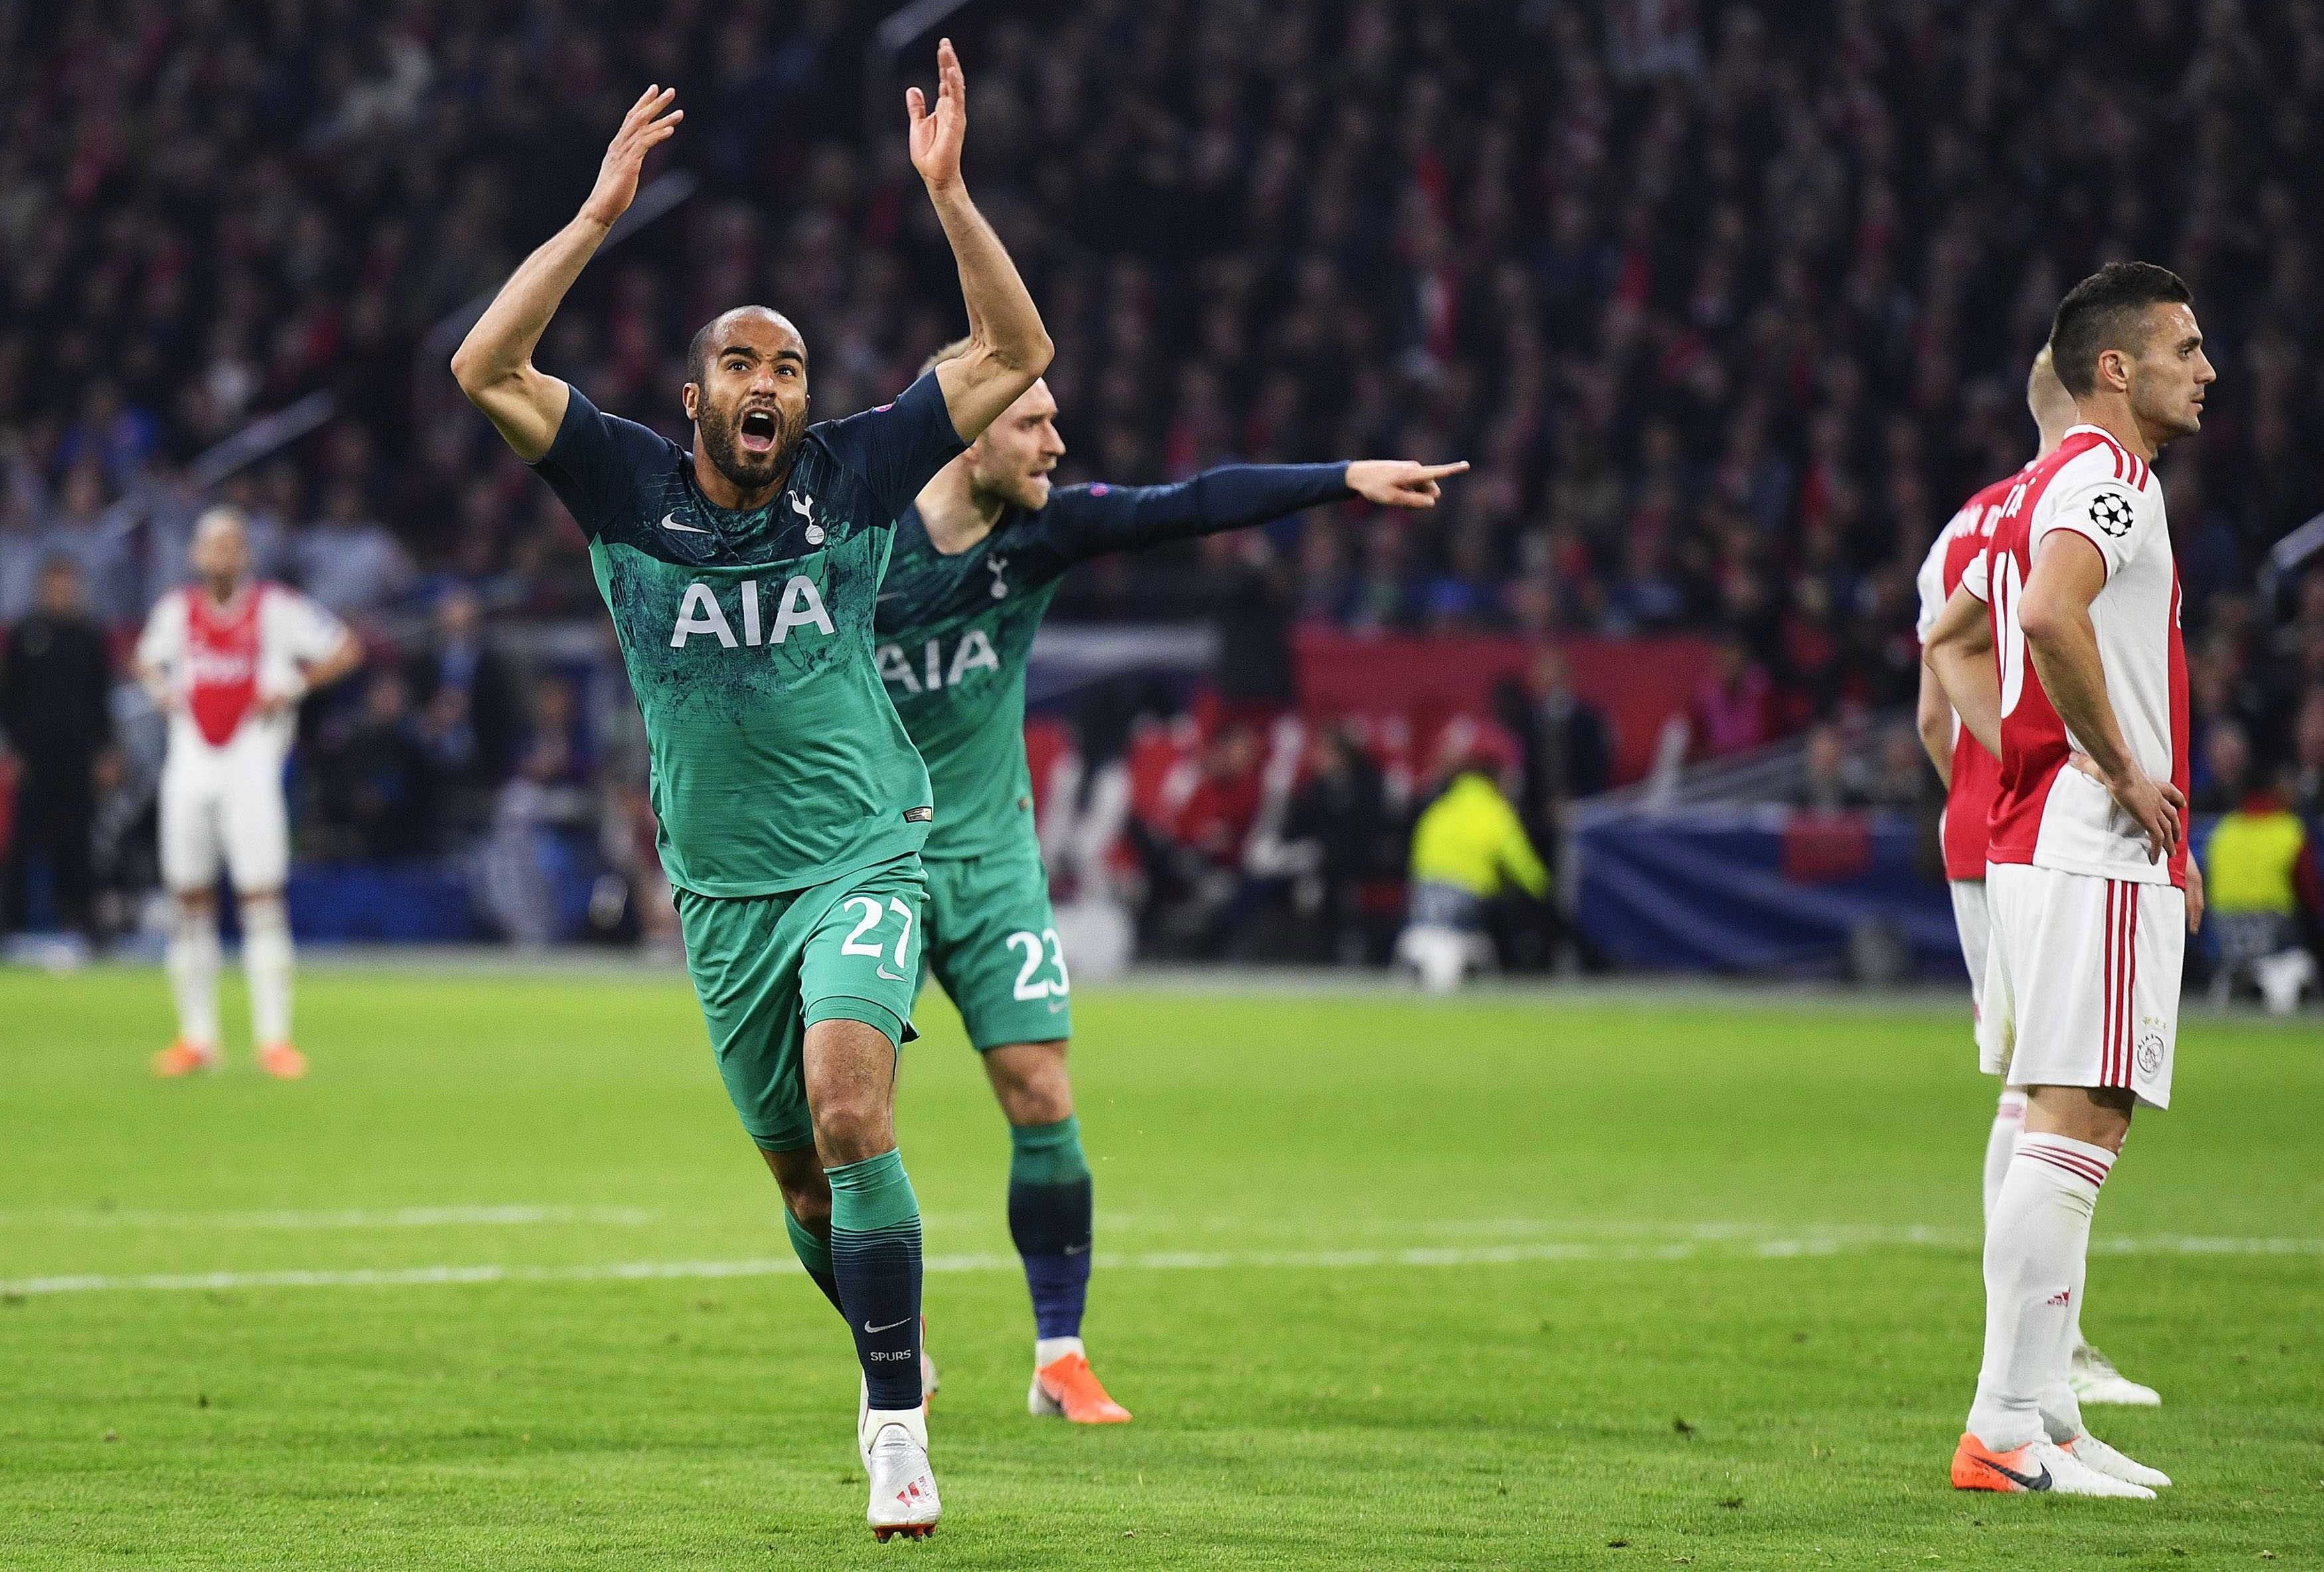 El Tottenham derrota al Ajax y será el rival del Liverpool en la final de la Champions (2-3)